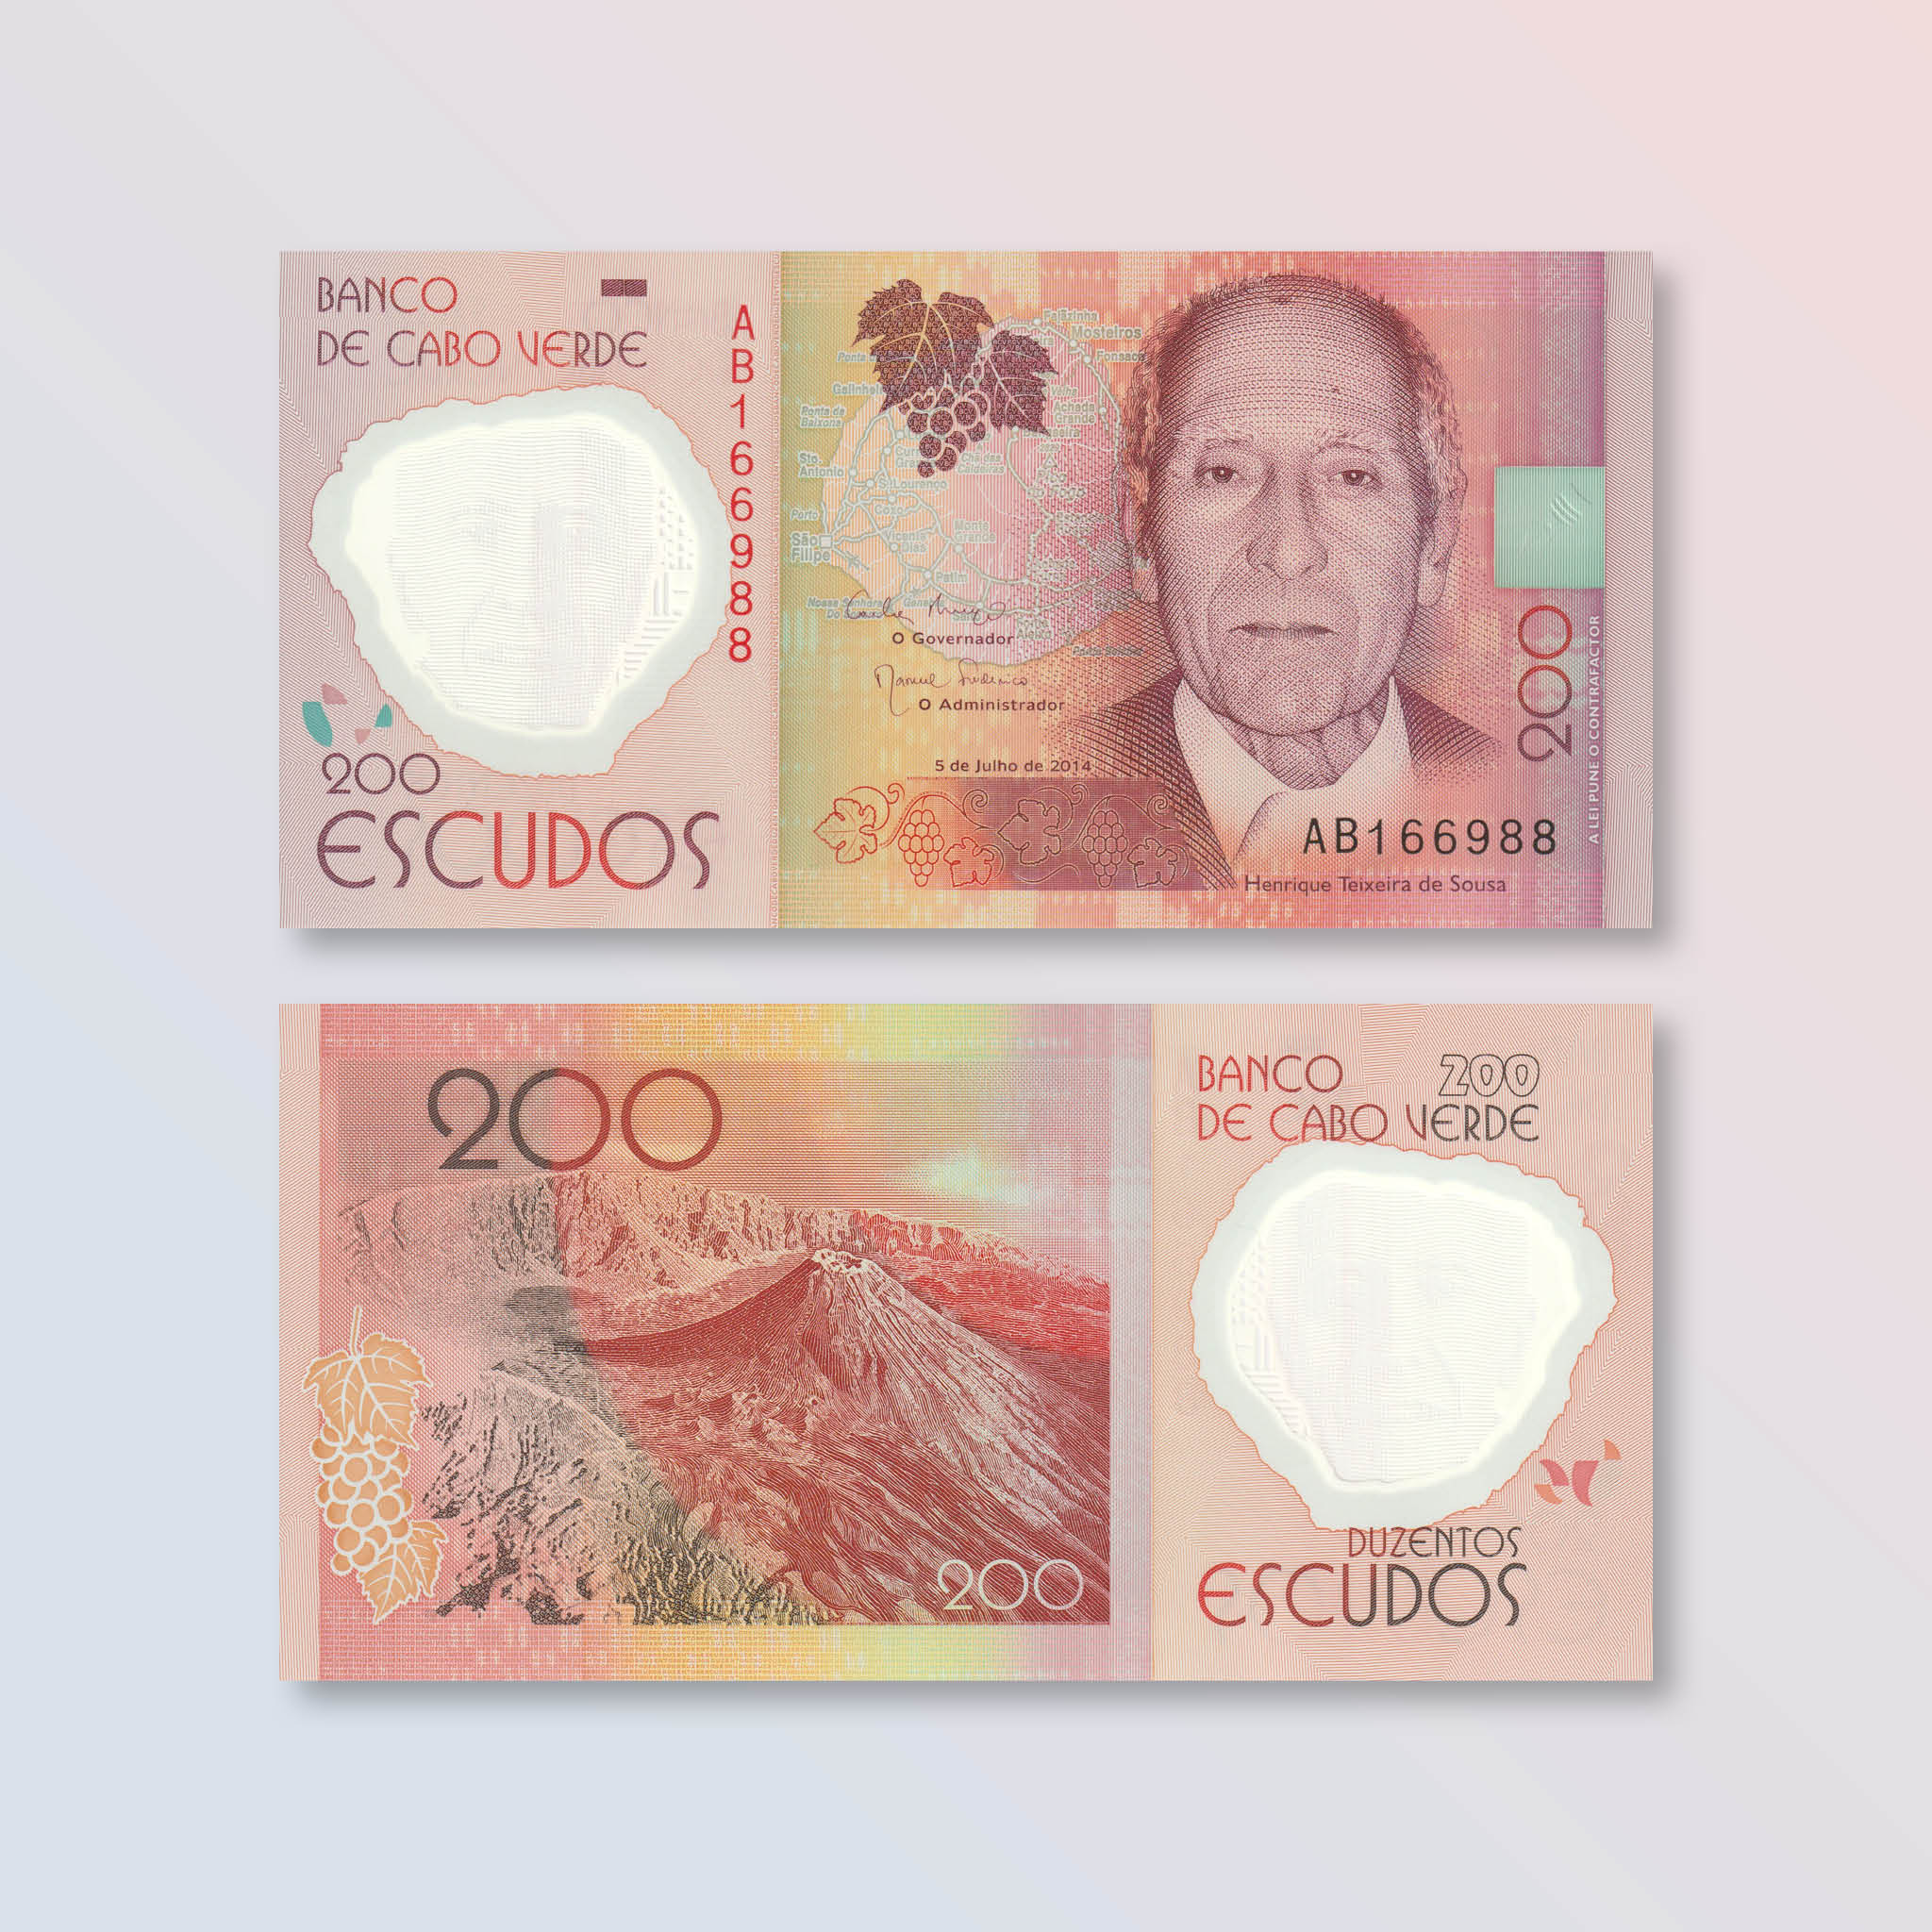 Cape Verde 200 Escudos, 2014, B217a, P71, UNC - Robert's World Money - World Banknotes